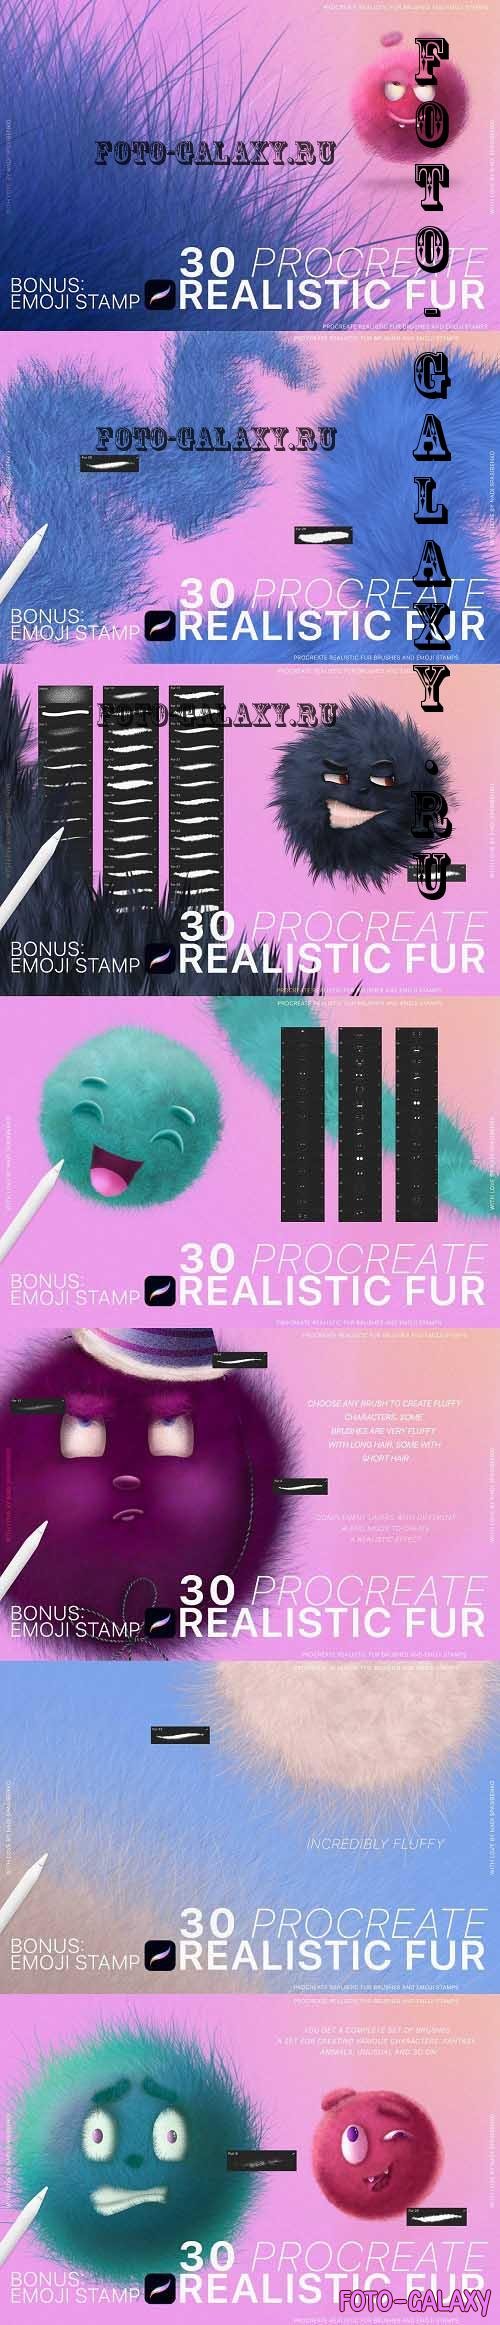 Procreate Realistic Fur & Emoji - 6794275